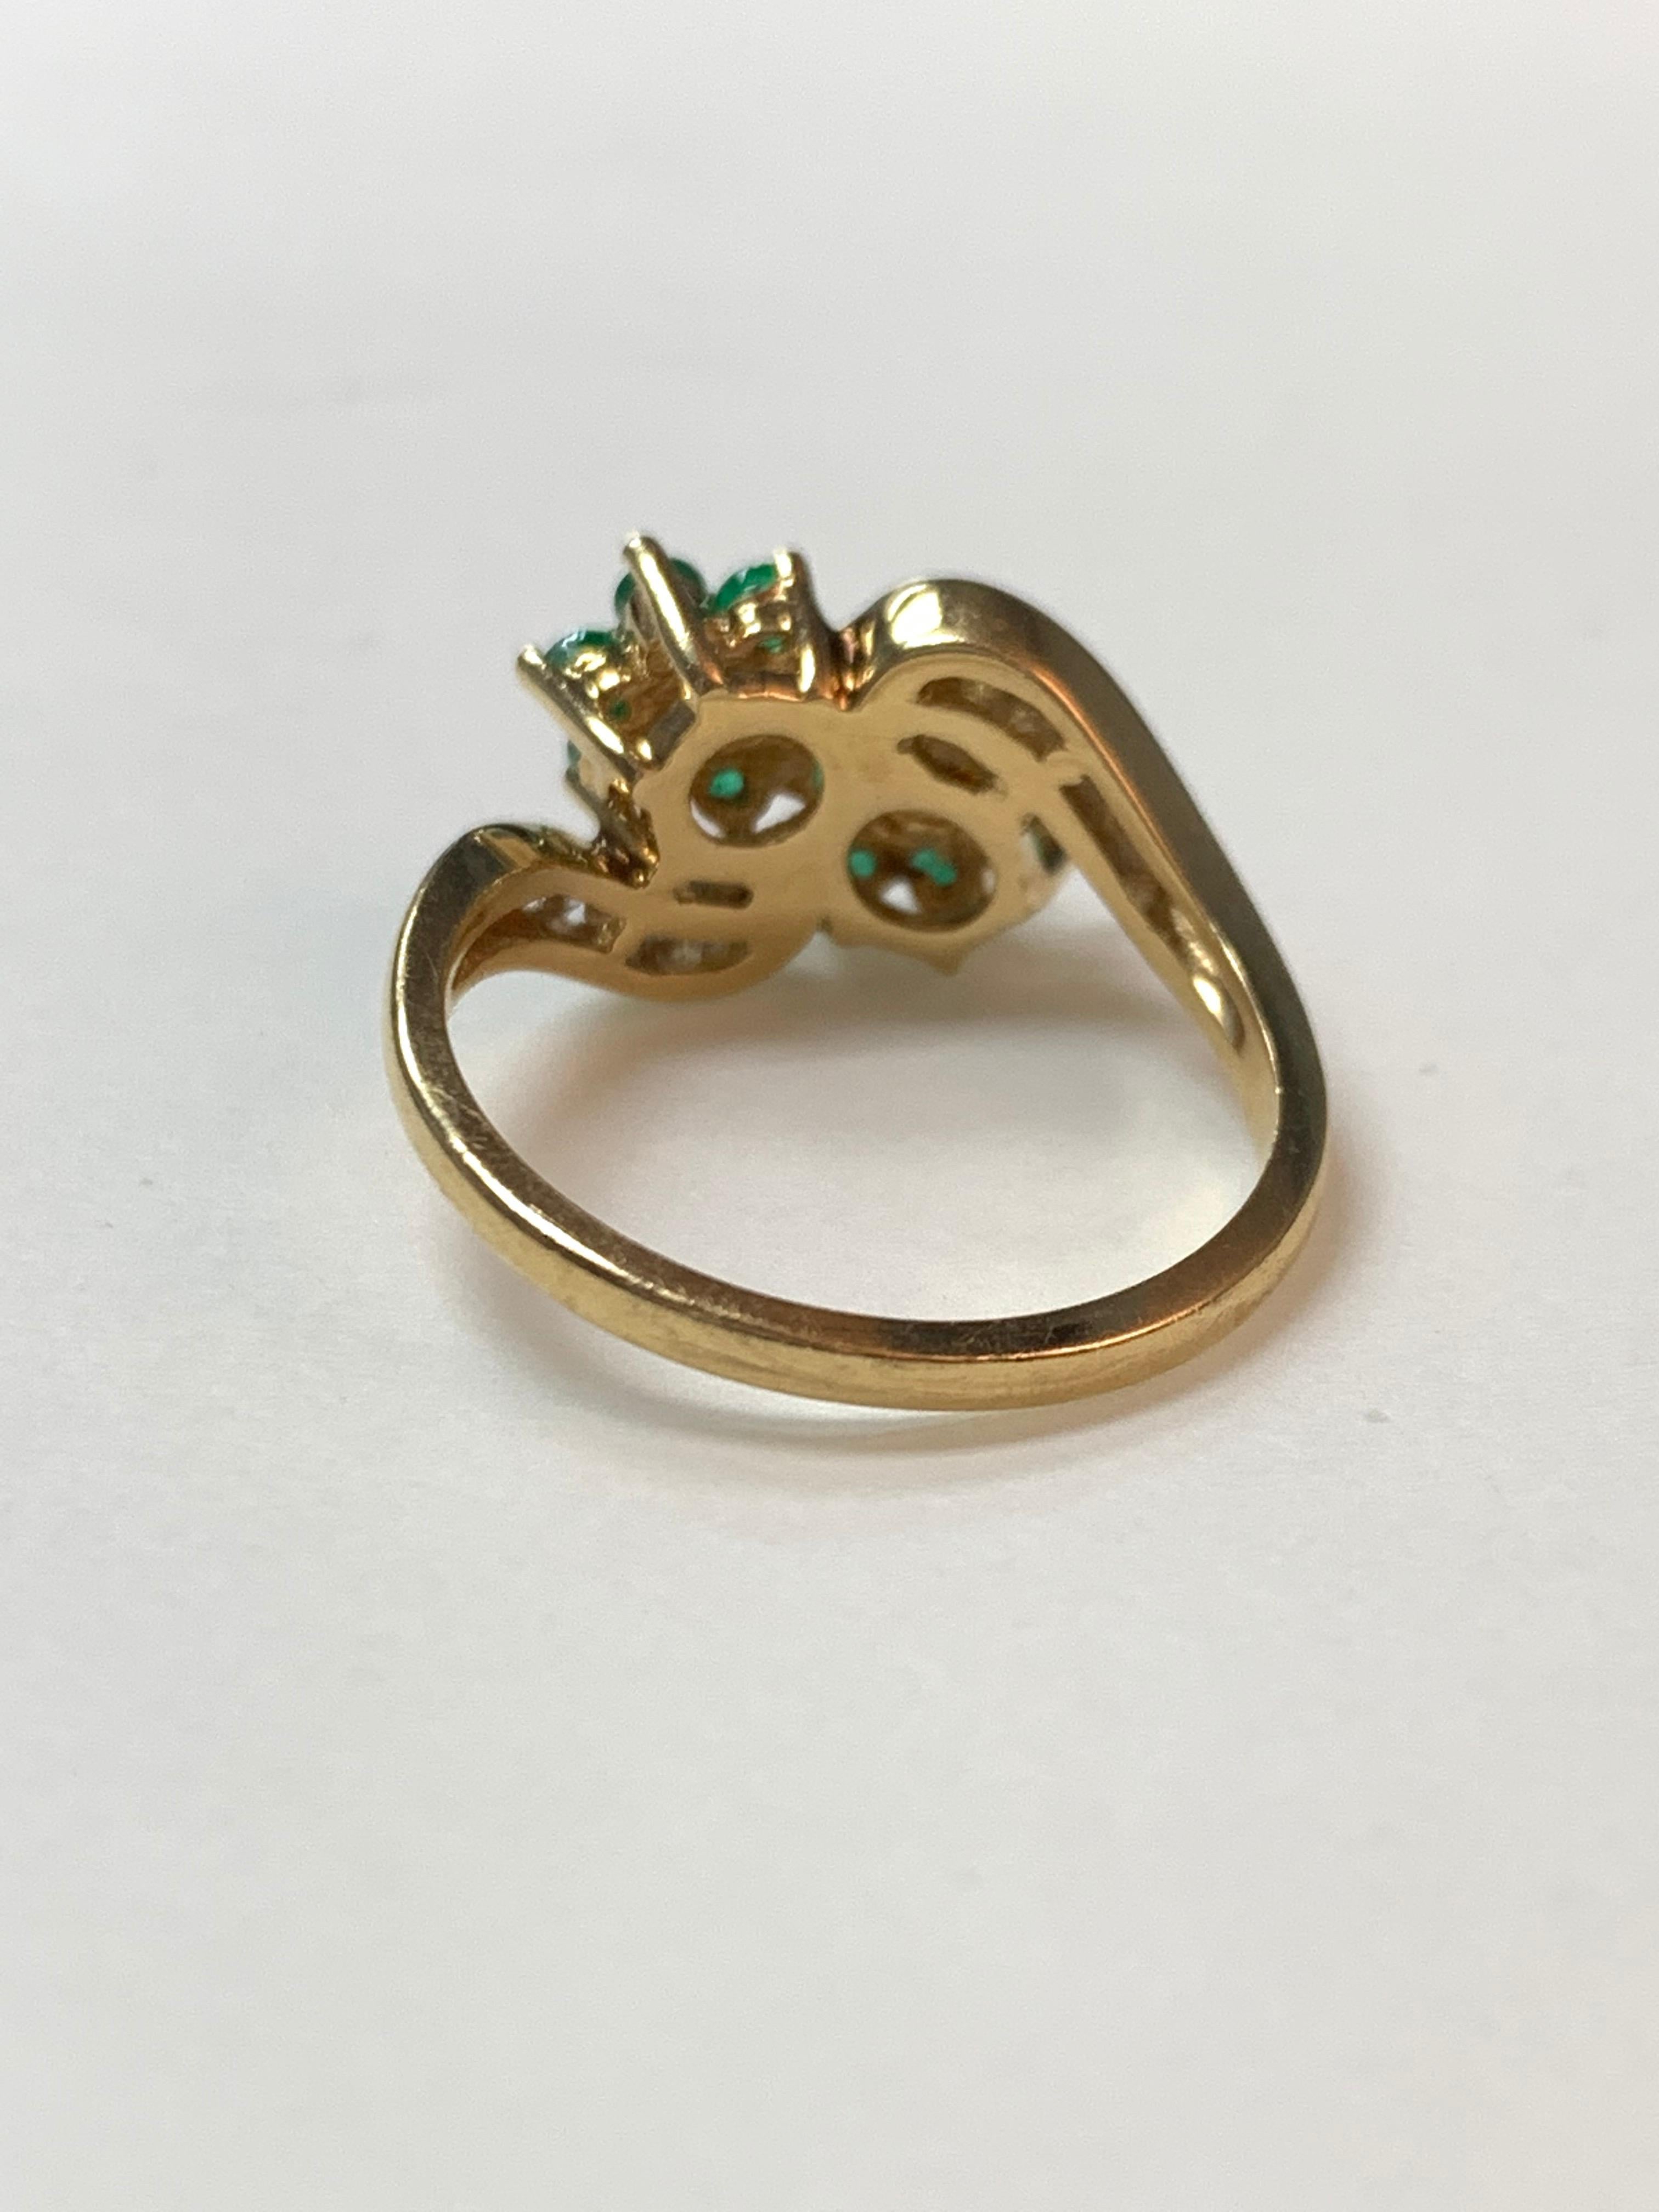 Round Cut Diamond and Emerald Ring in 14 Karat Yellow Gold.